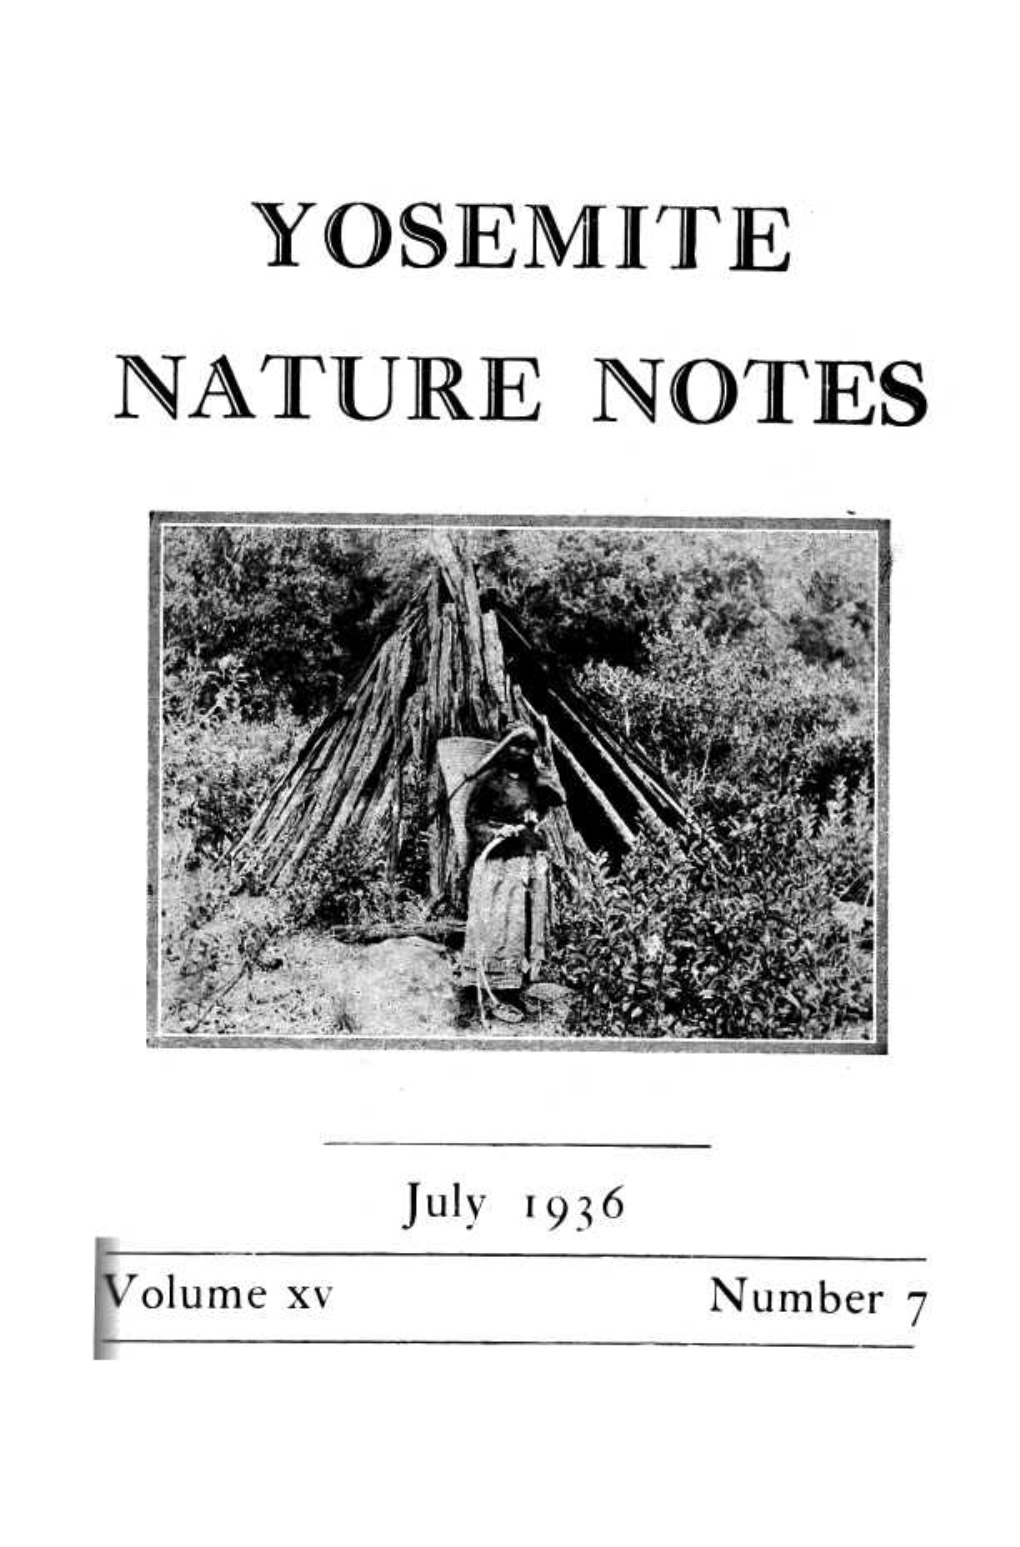 Yosjemite Nature Notes